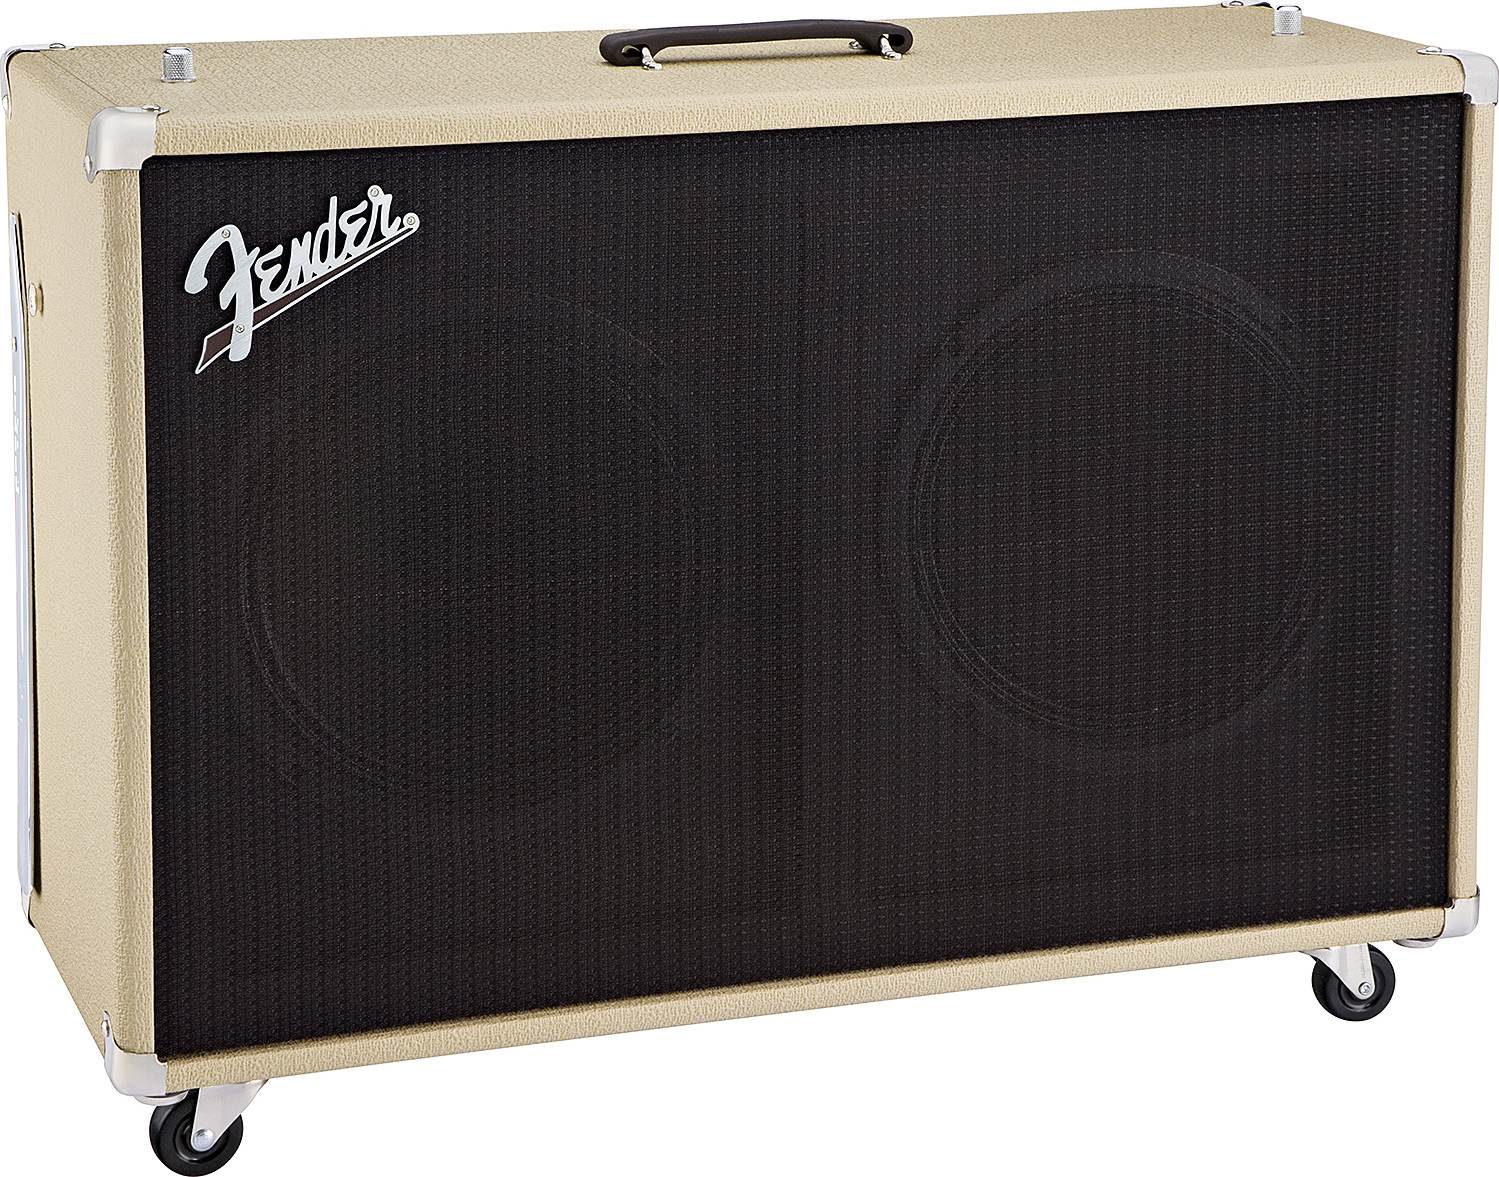 Fender Super Sonic 60 212 Enclosure 2x12 120w Blonde - Cabina amplificador para guitarra eléctrica - Main picture